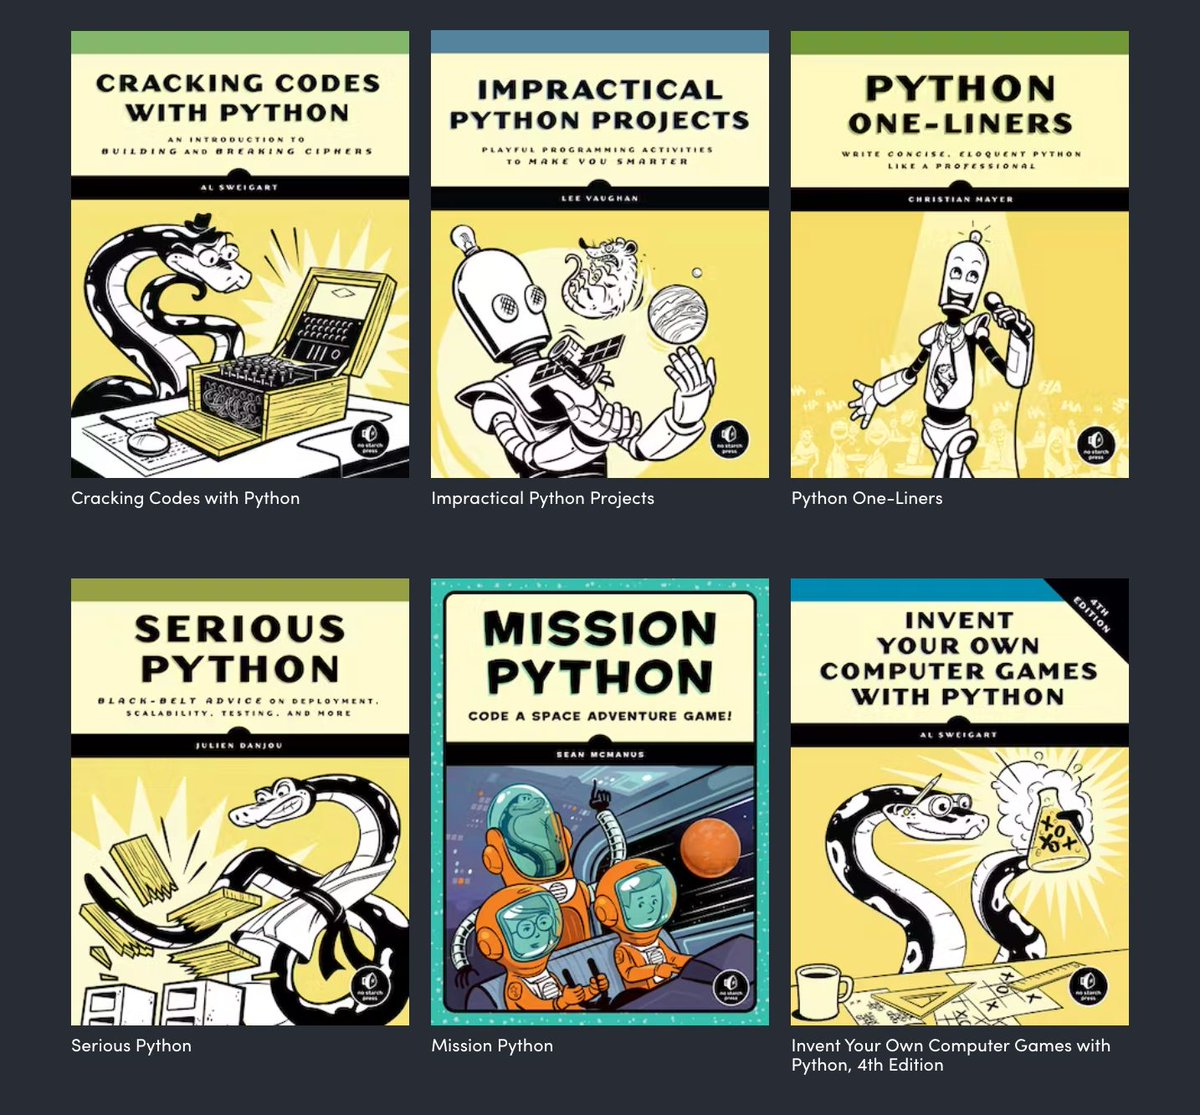 Python Book Bundle to Read! #BigData #Analytics #DataScience #IoT #IIoT #PyTorch #Python #RStats #TensorFlow #Java #JavaScript #ReactJS #GoLang #CloudComputing #Serverless #DataScientist #Linux #Books #Programming #Coding #100DaysofCode 
geni.us/Python-BookBun…